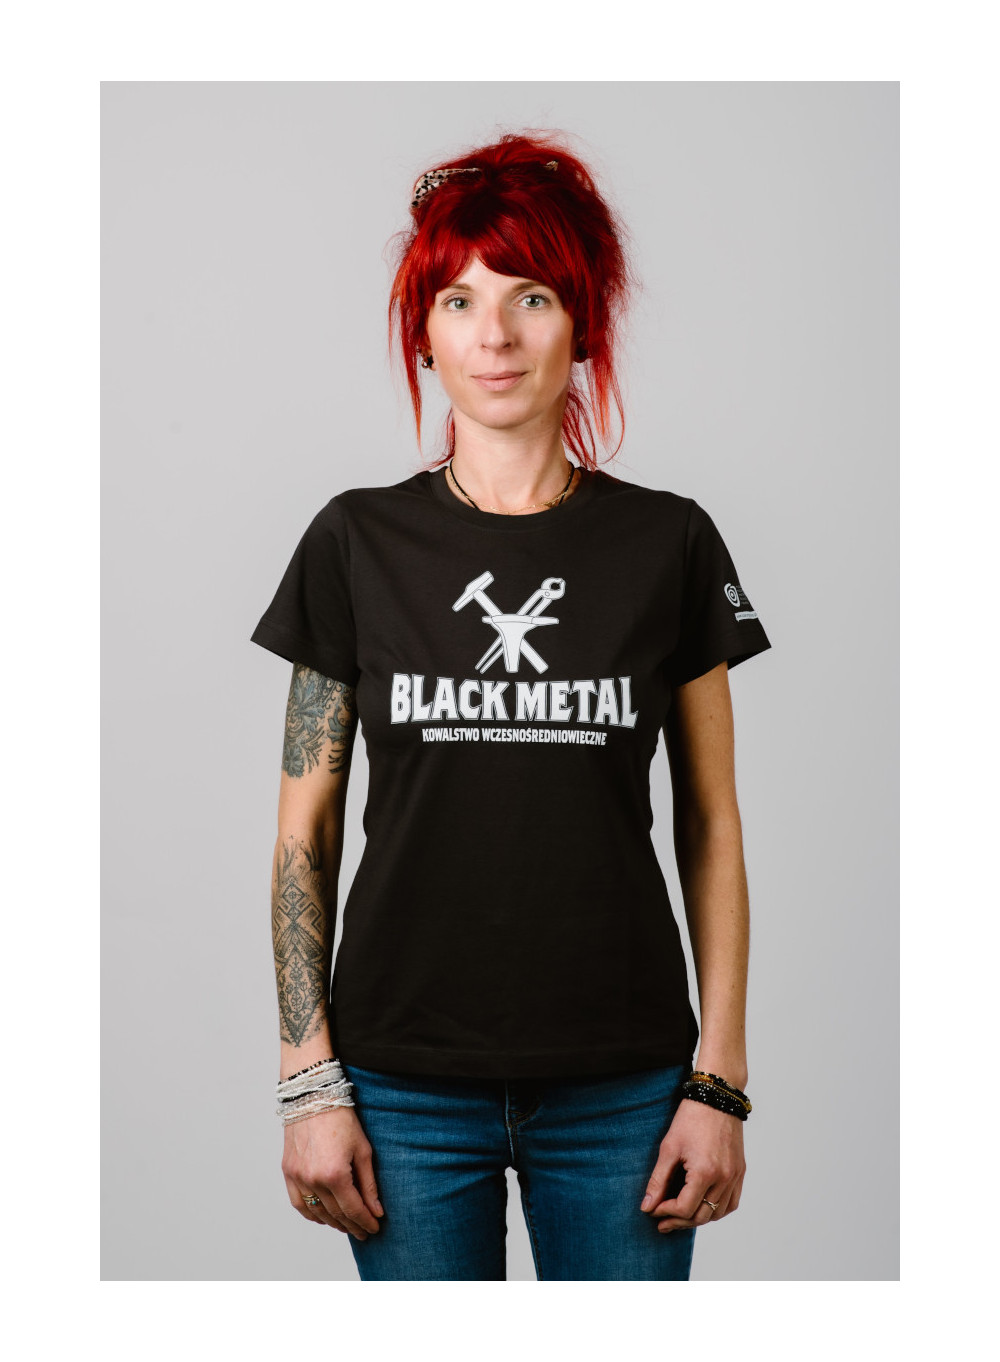 Koszulka Black metal damska